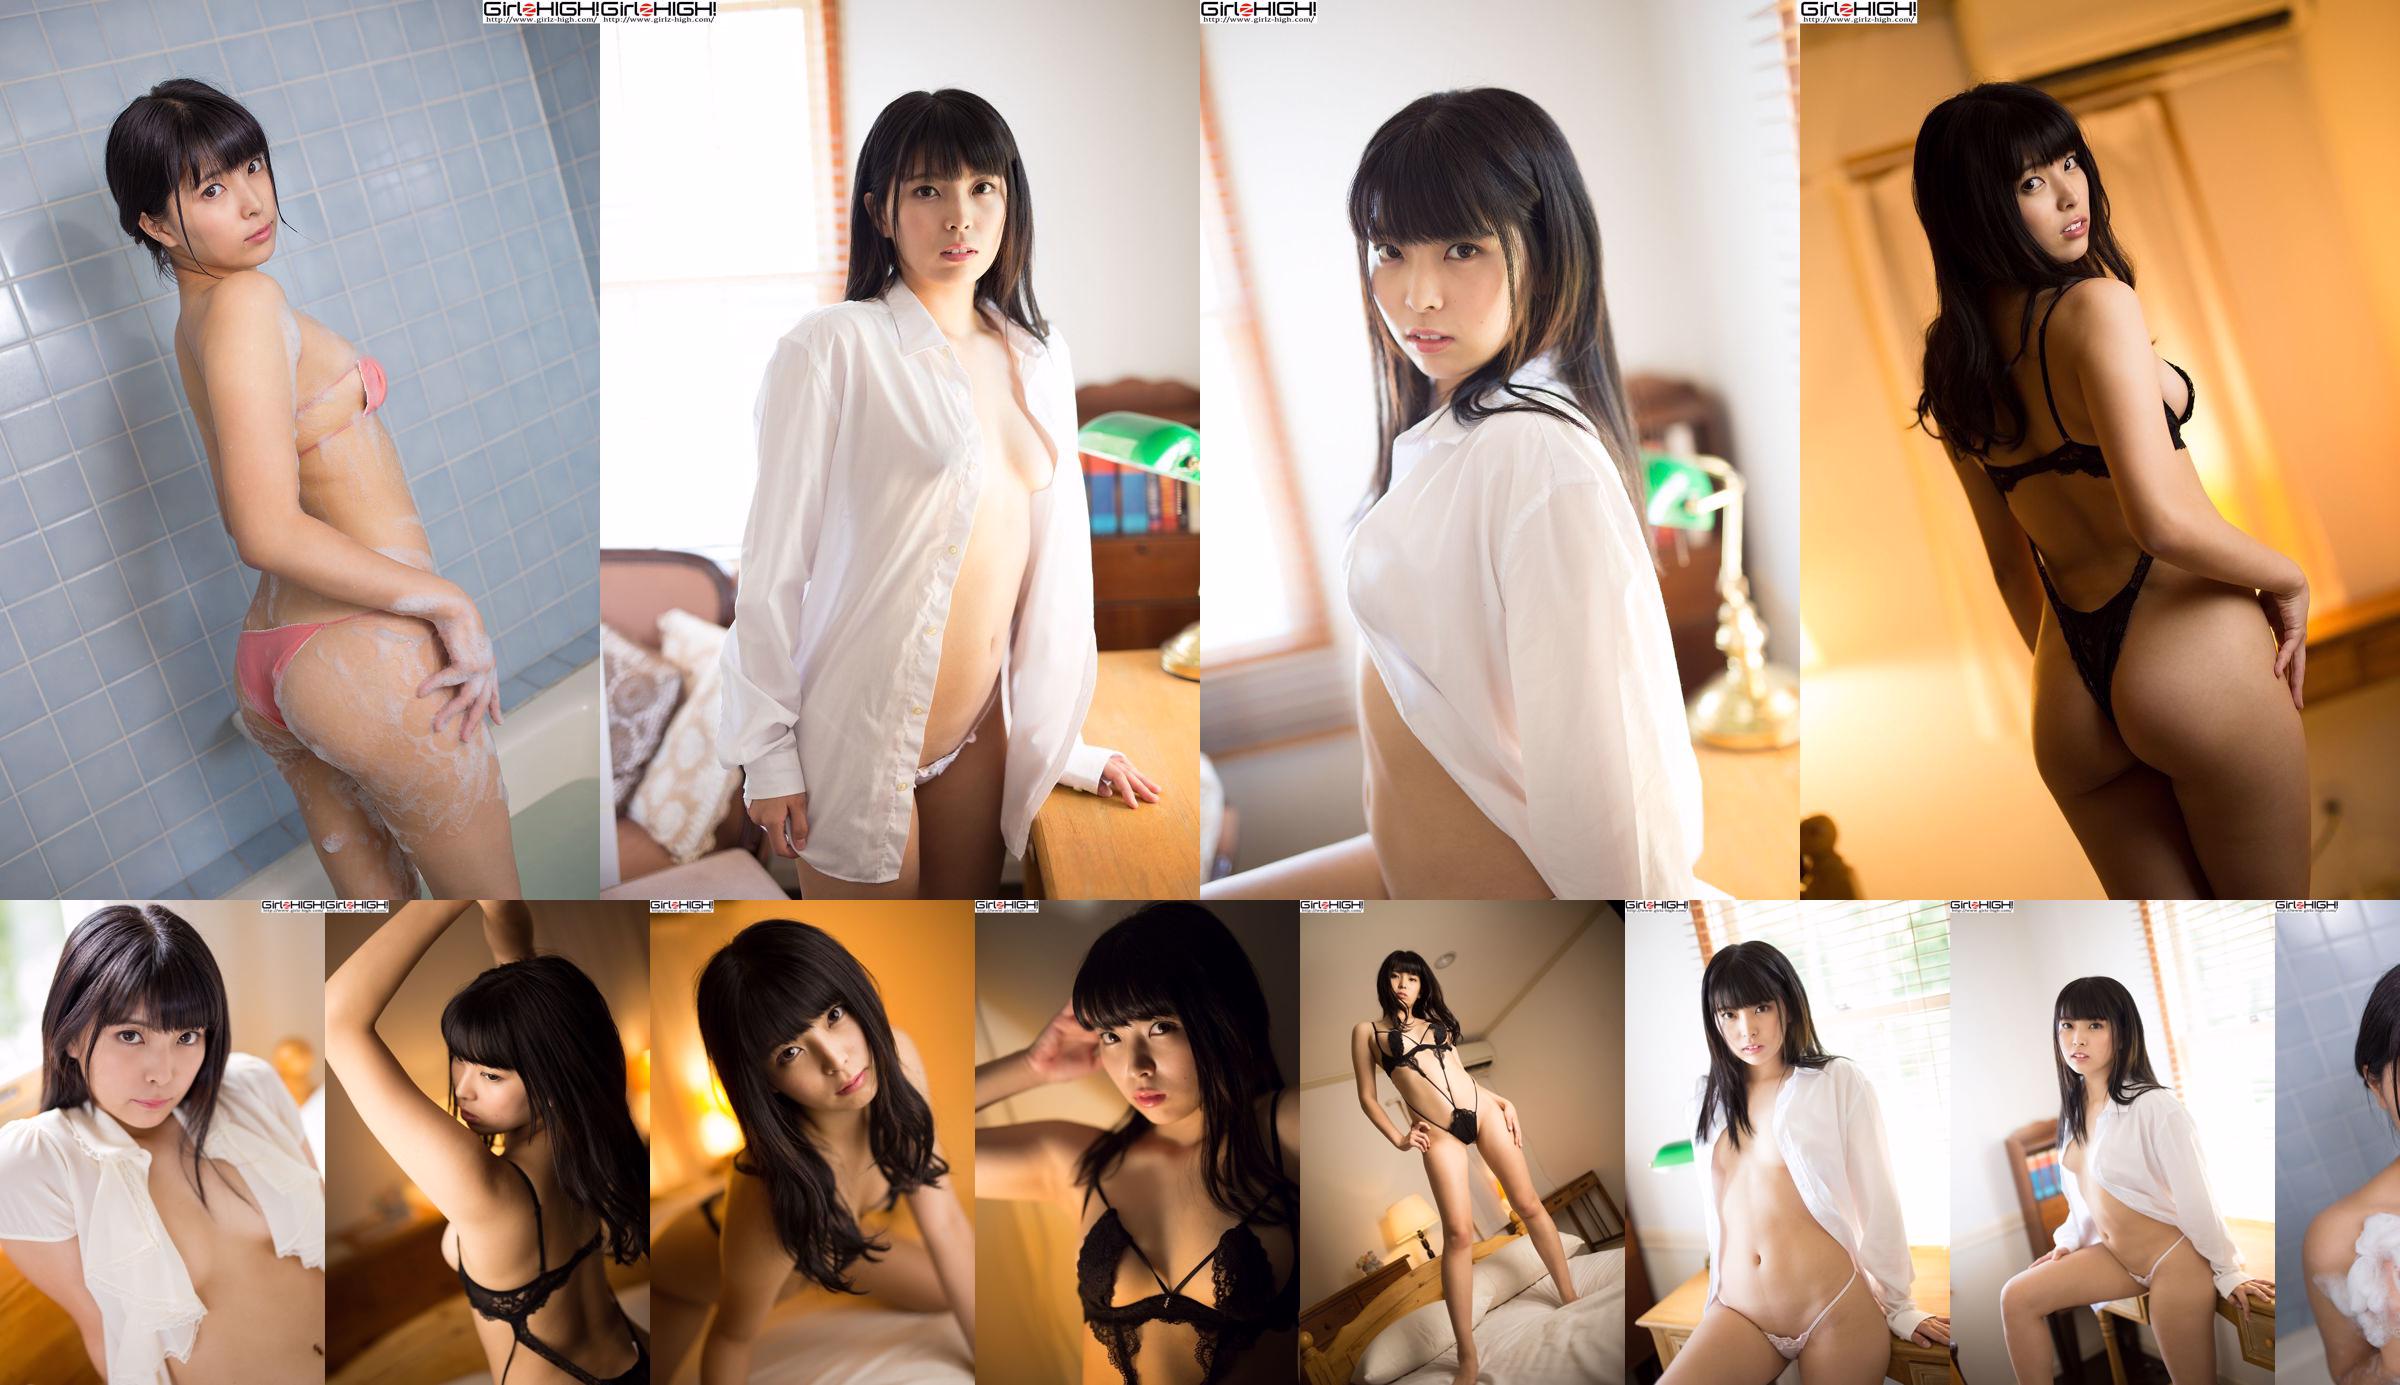 Miharu Mochizuki "Nice to meet you" Y-shirt [Girlz-High] No.425f0d Page 1